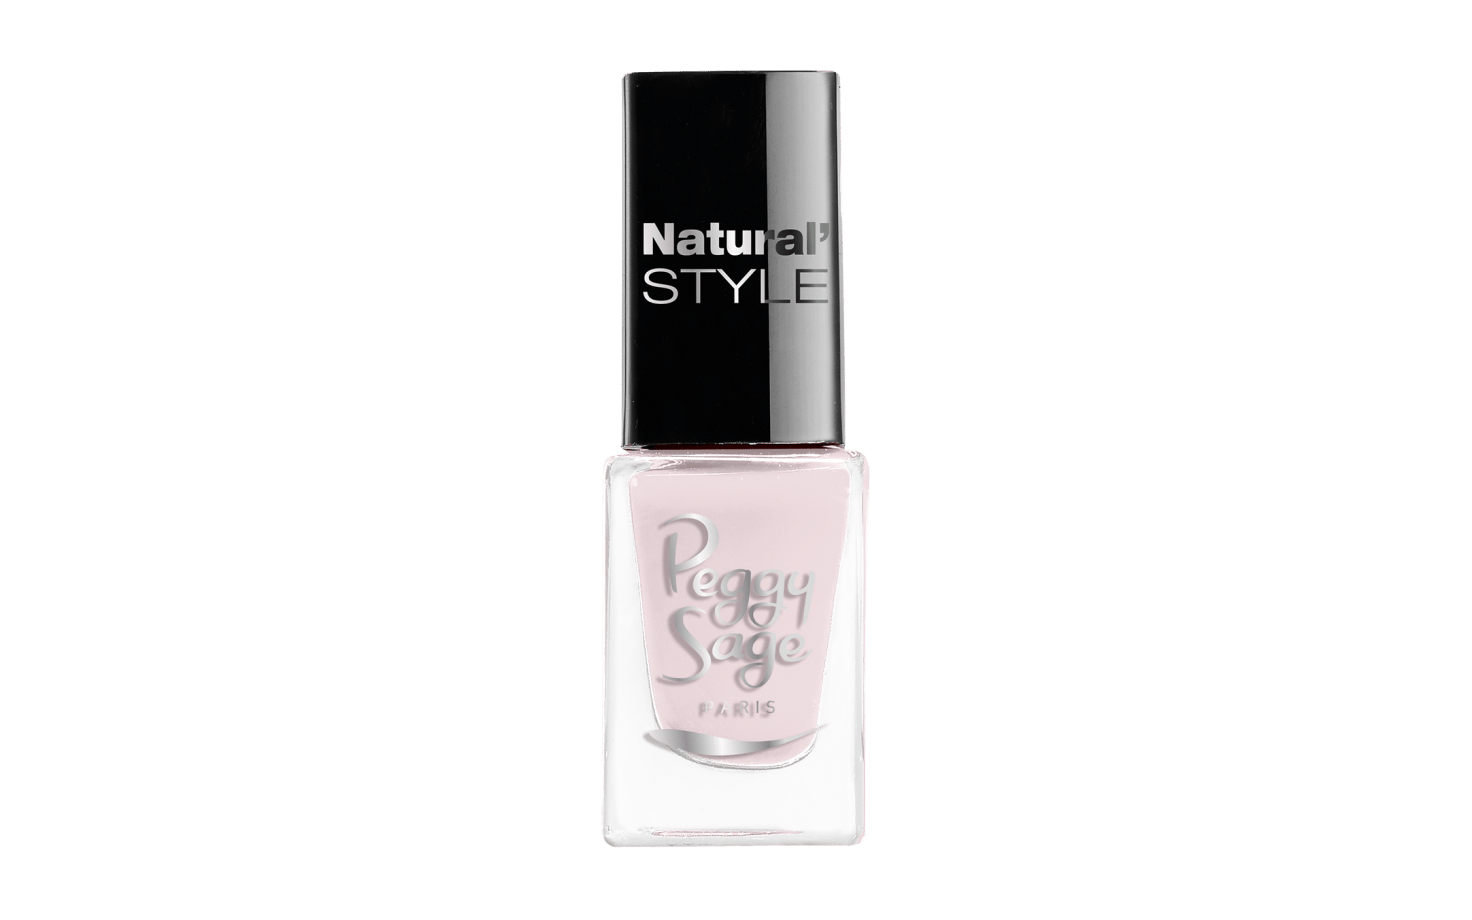 Nagellack Natural'style